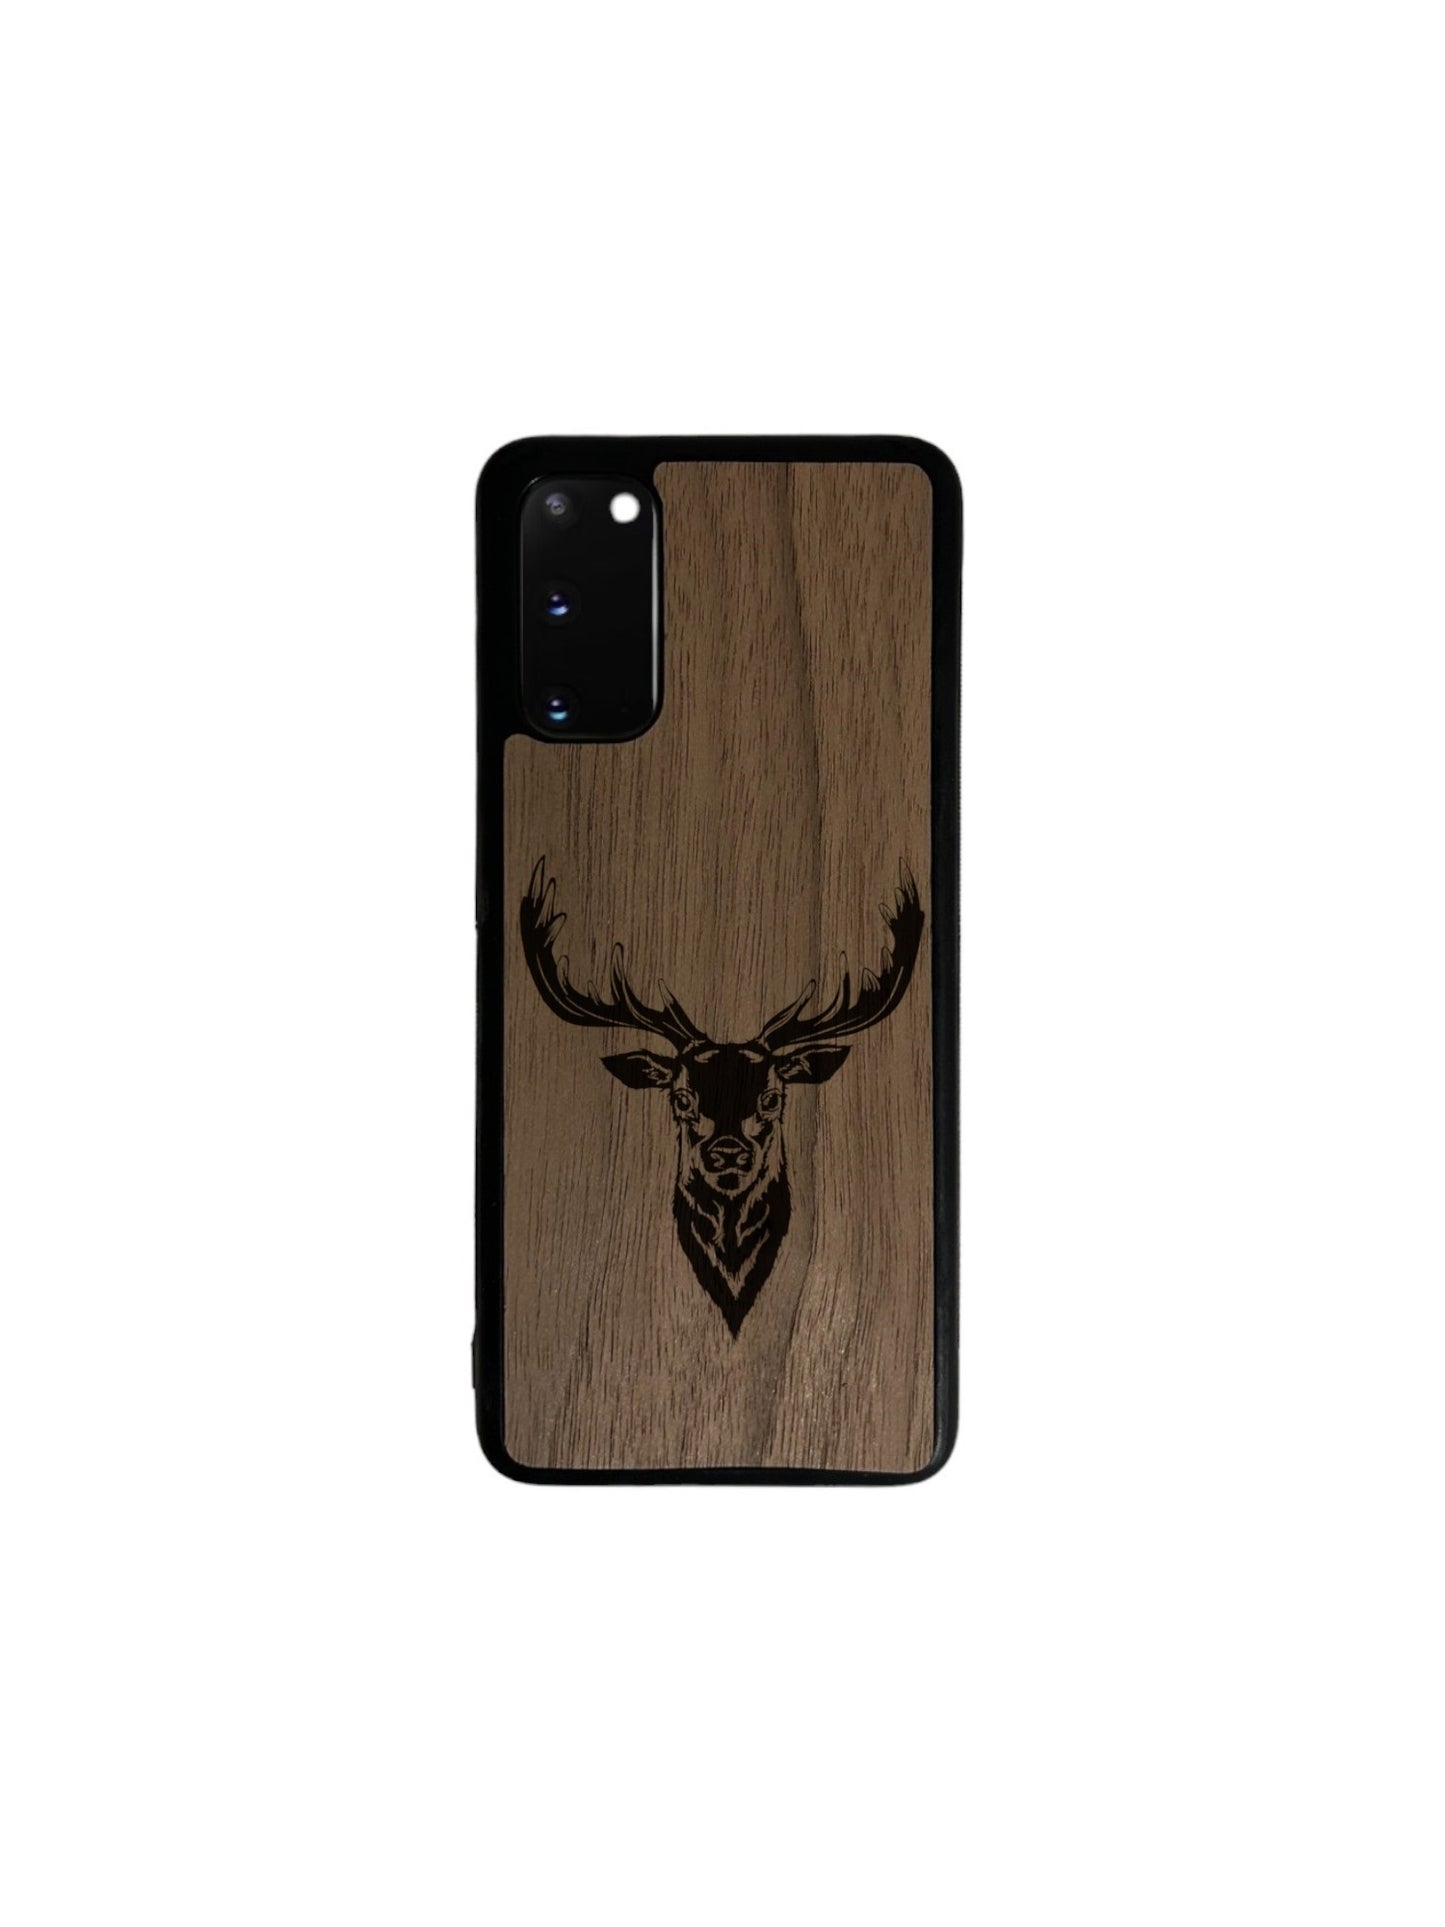 Samsung Galaxy S case - Deer engraving